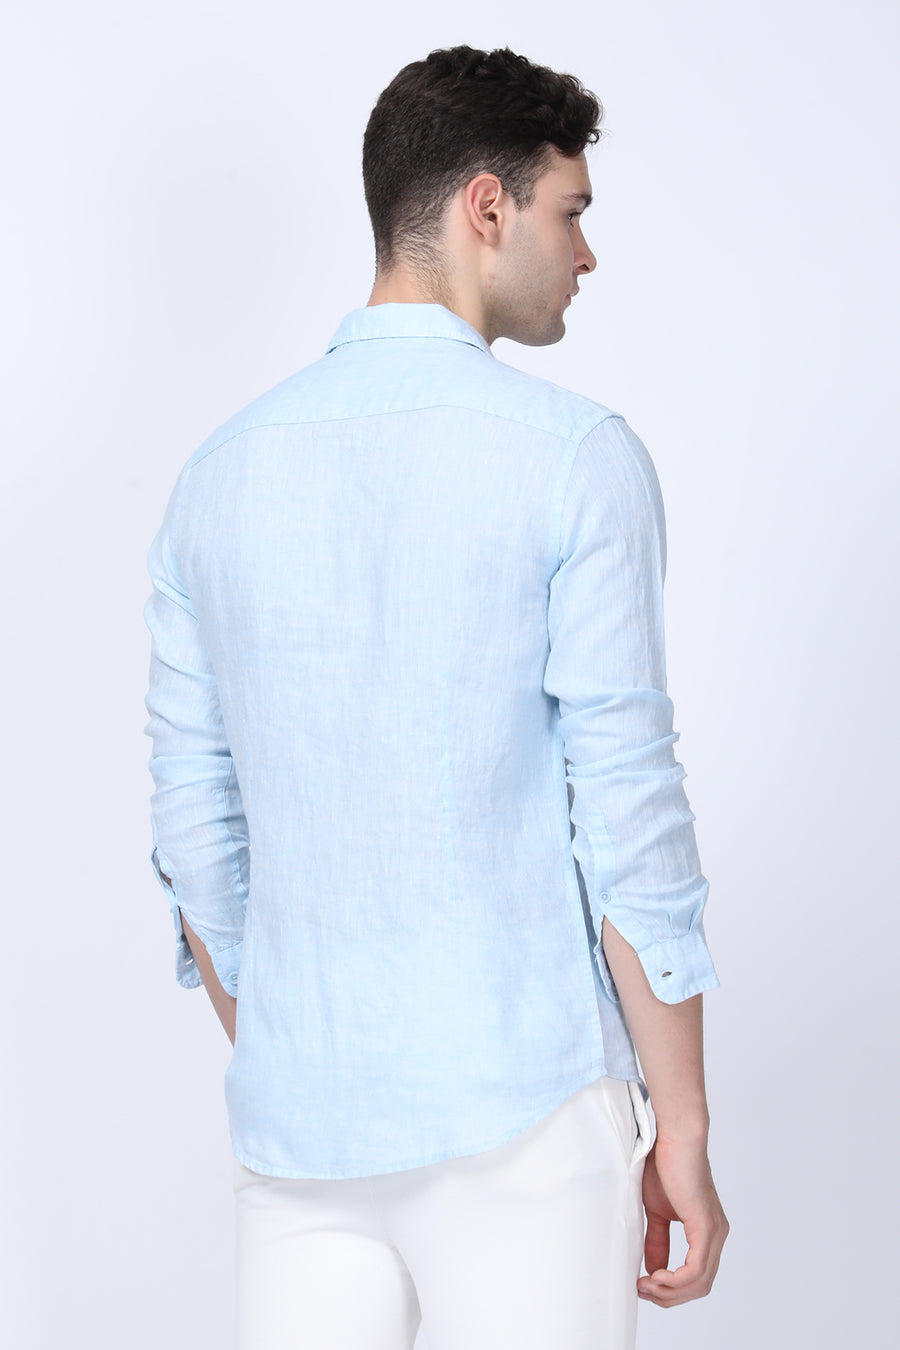 Oyalo - 100% Linen Shirt - Lt Blue